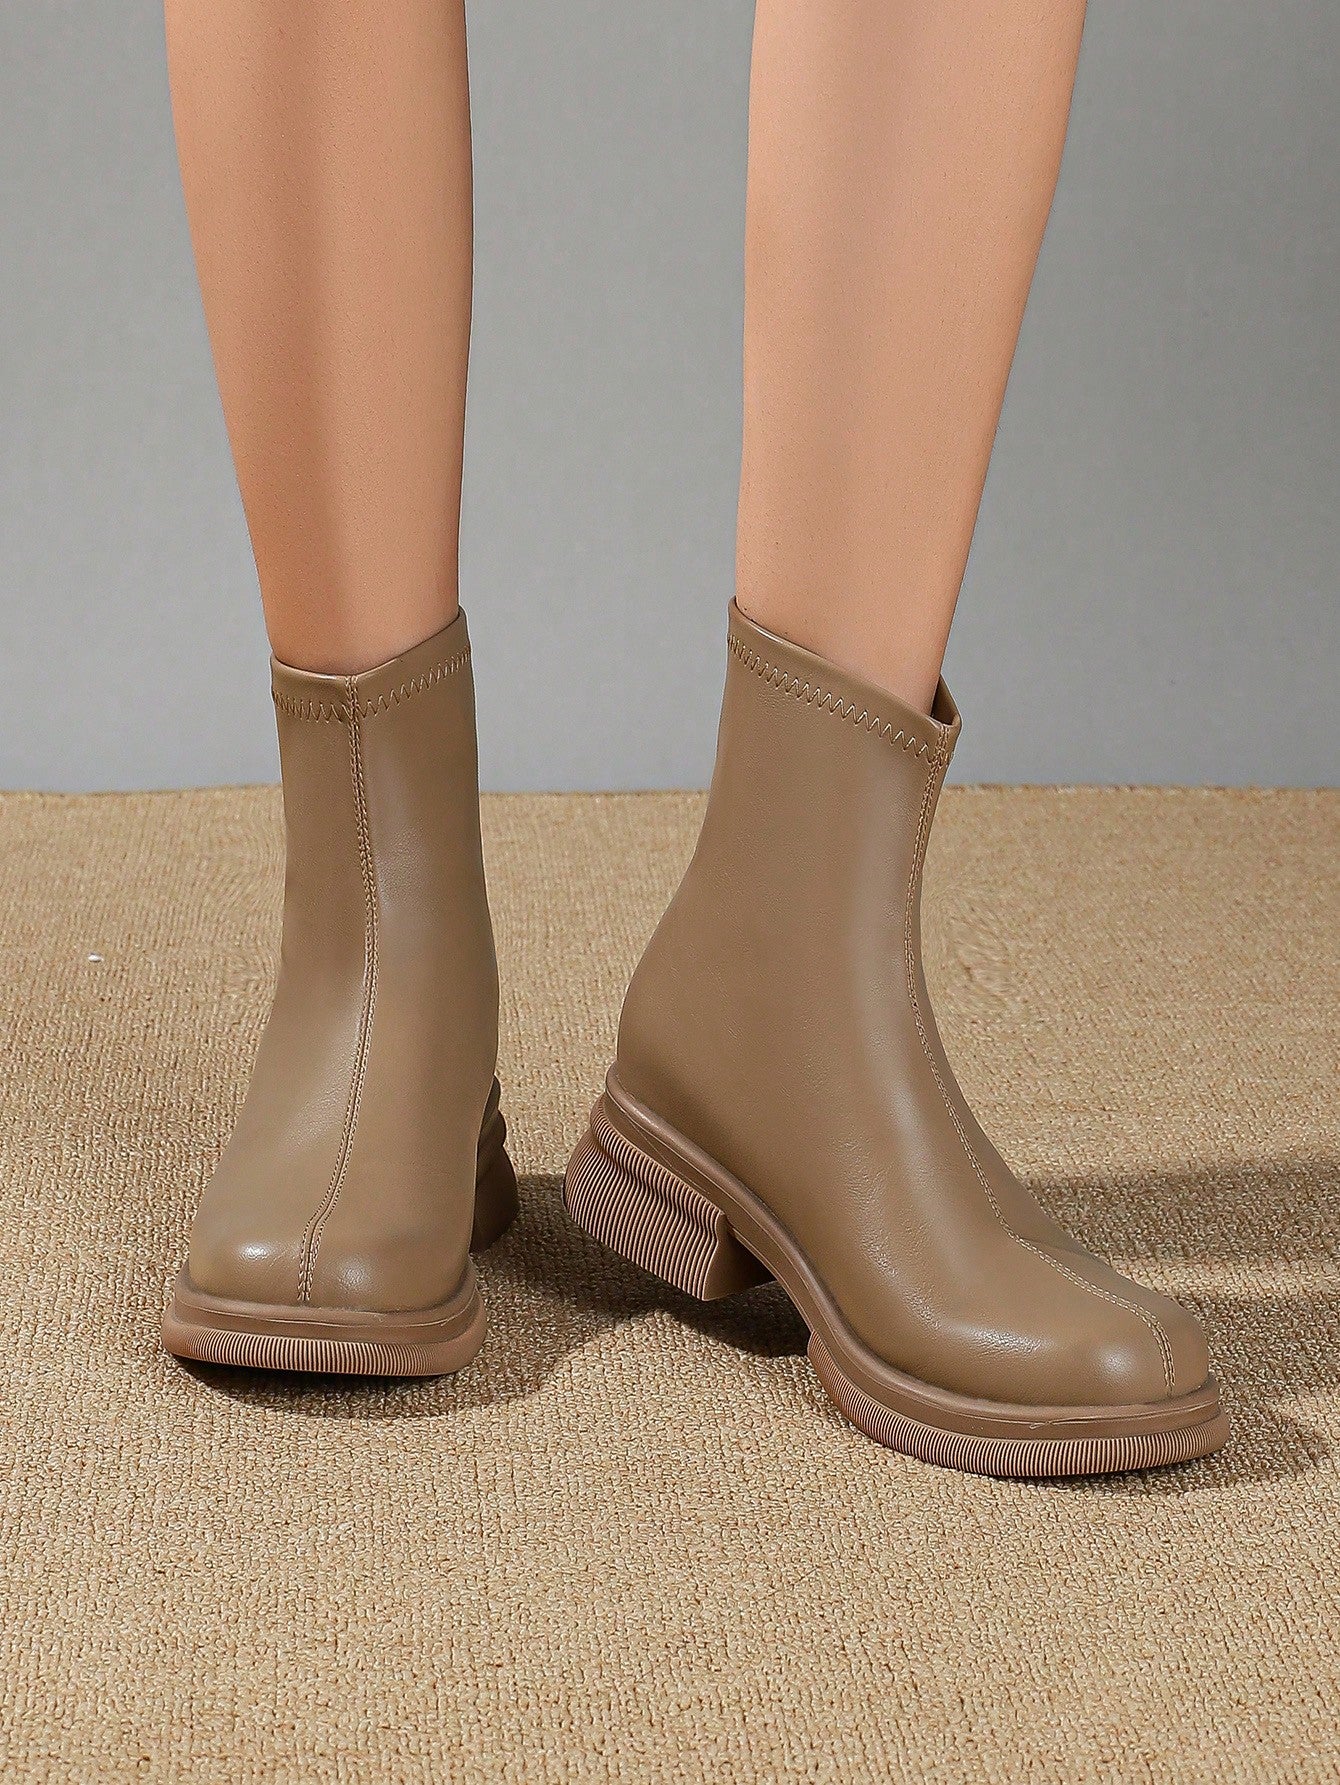 Women's Fashion Boots-Khaki-1